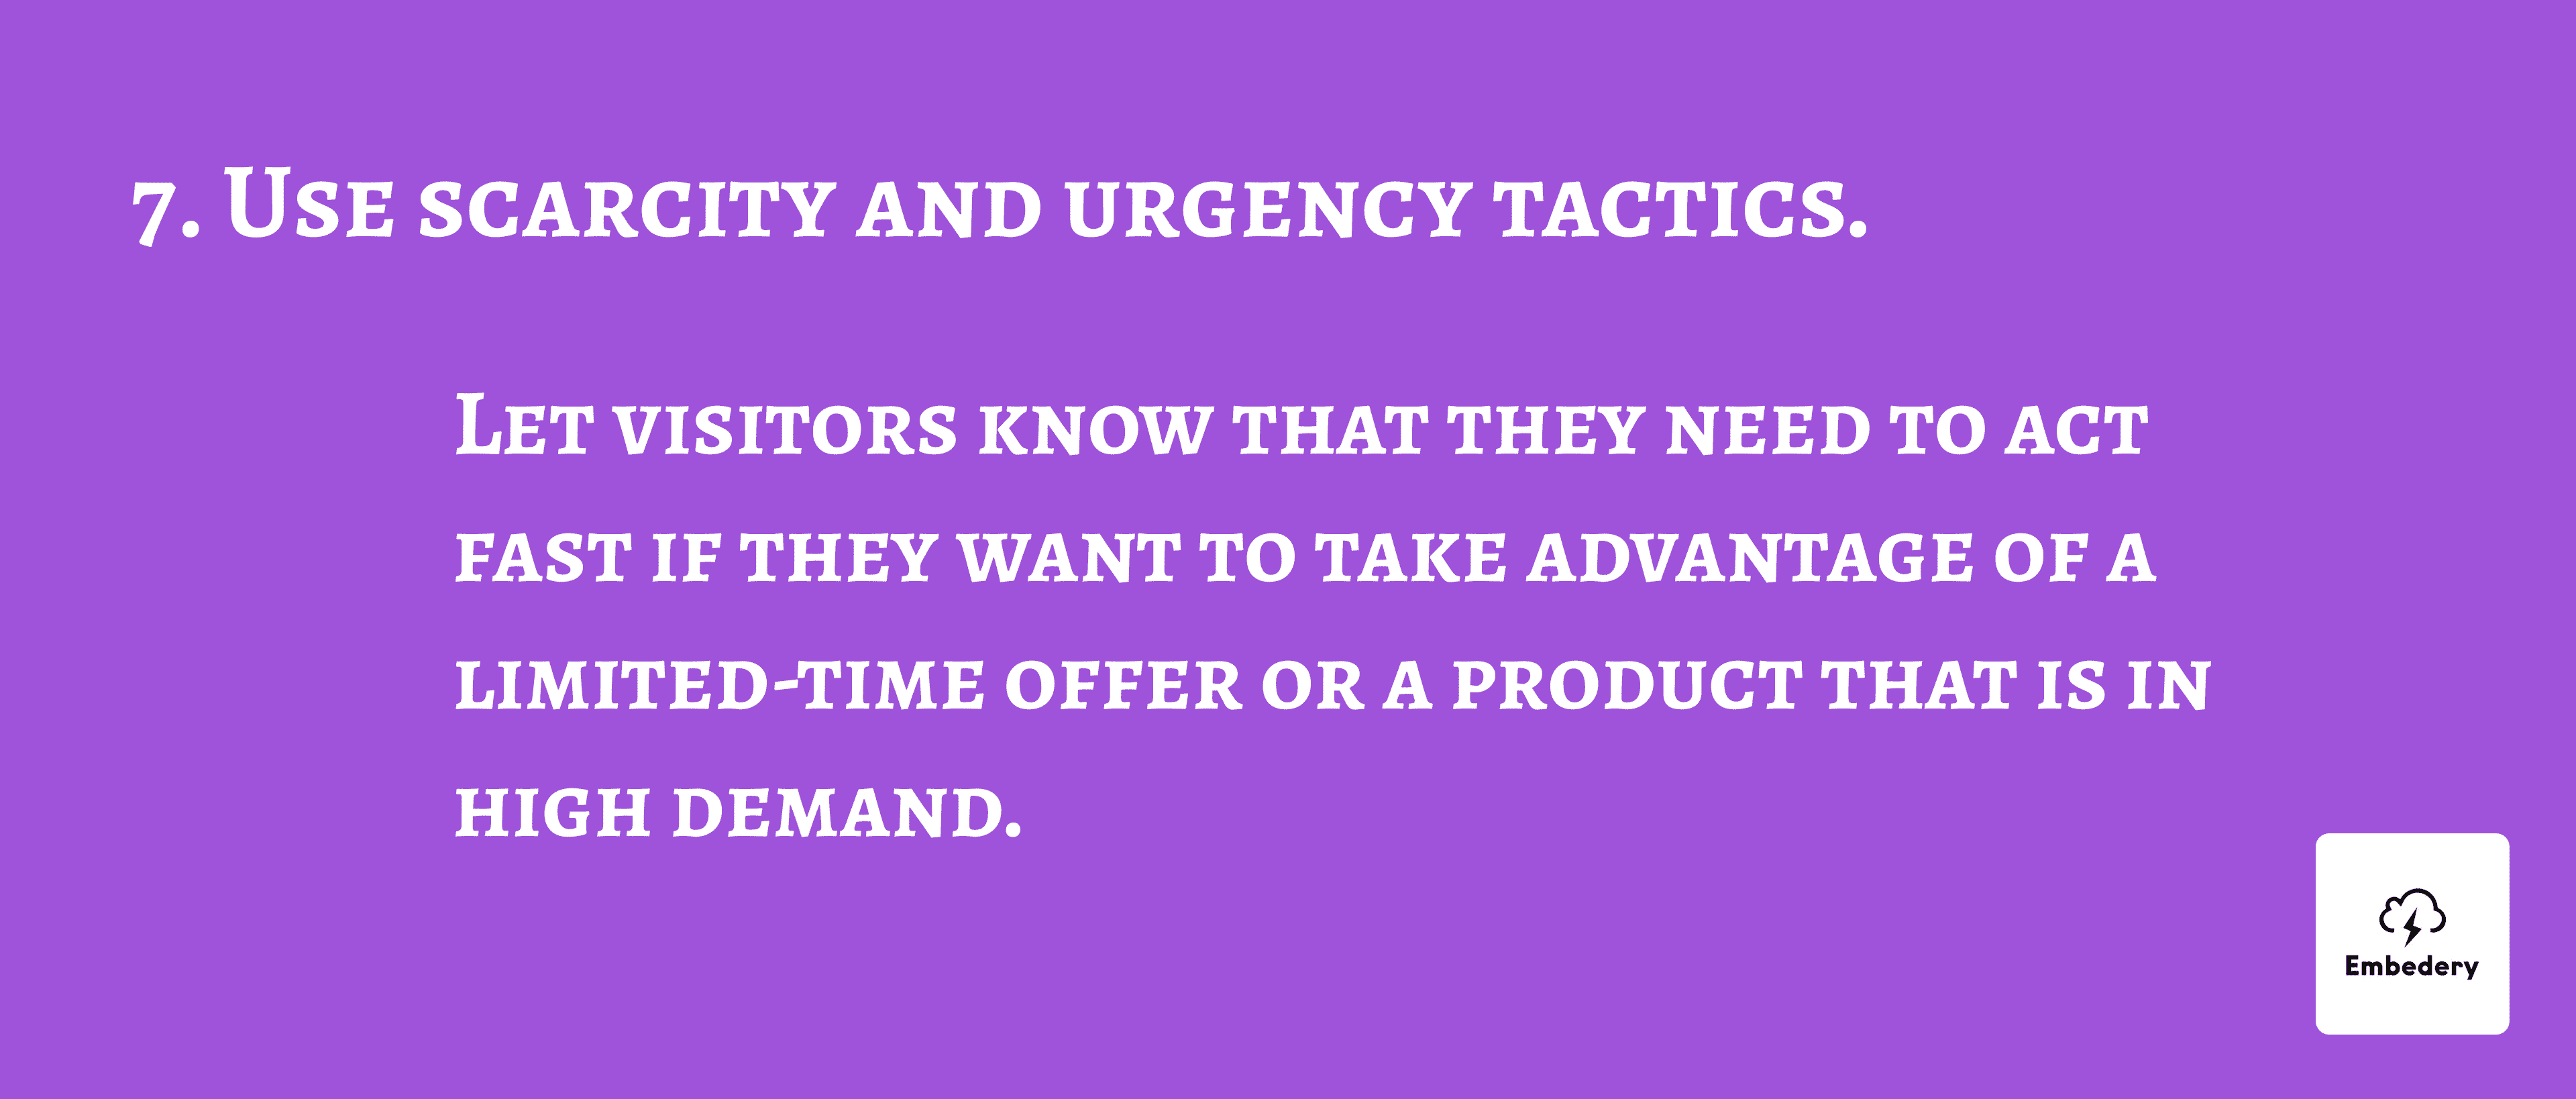 Use scarcity and urgency tactics